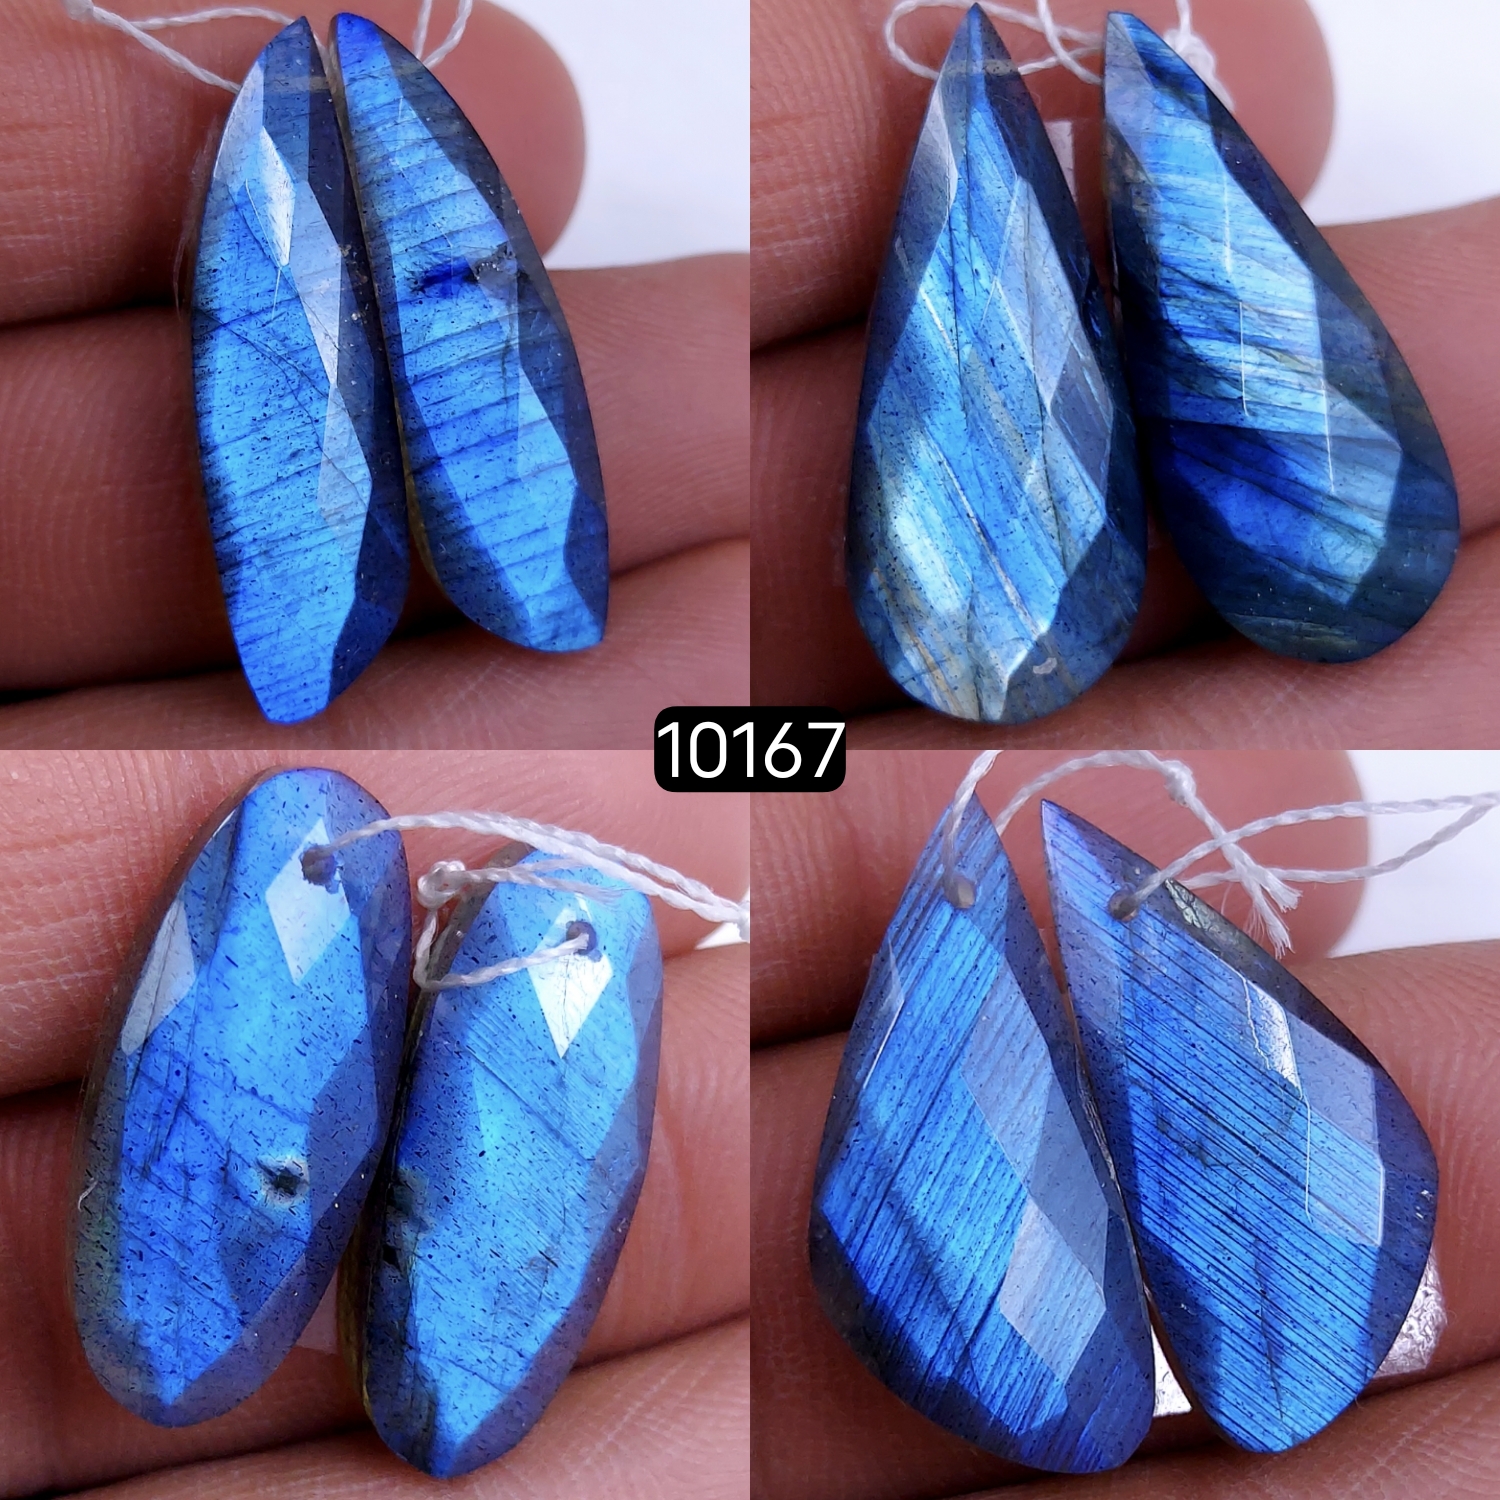 4Pair 95Cts Natural Labradorite Blue Fire Dangle Drop Earrings Semi Precious Crystal For Hoop Earrings Blue Gemstone Cabochon Matching pair 30x9 24x10mm #10167